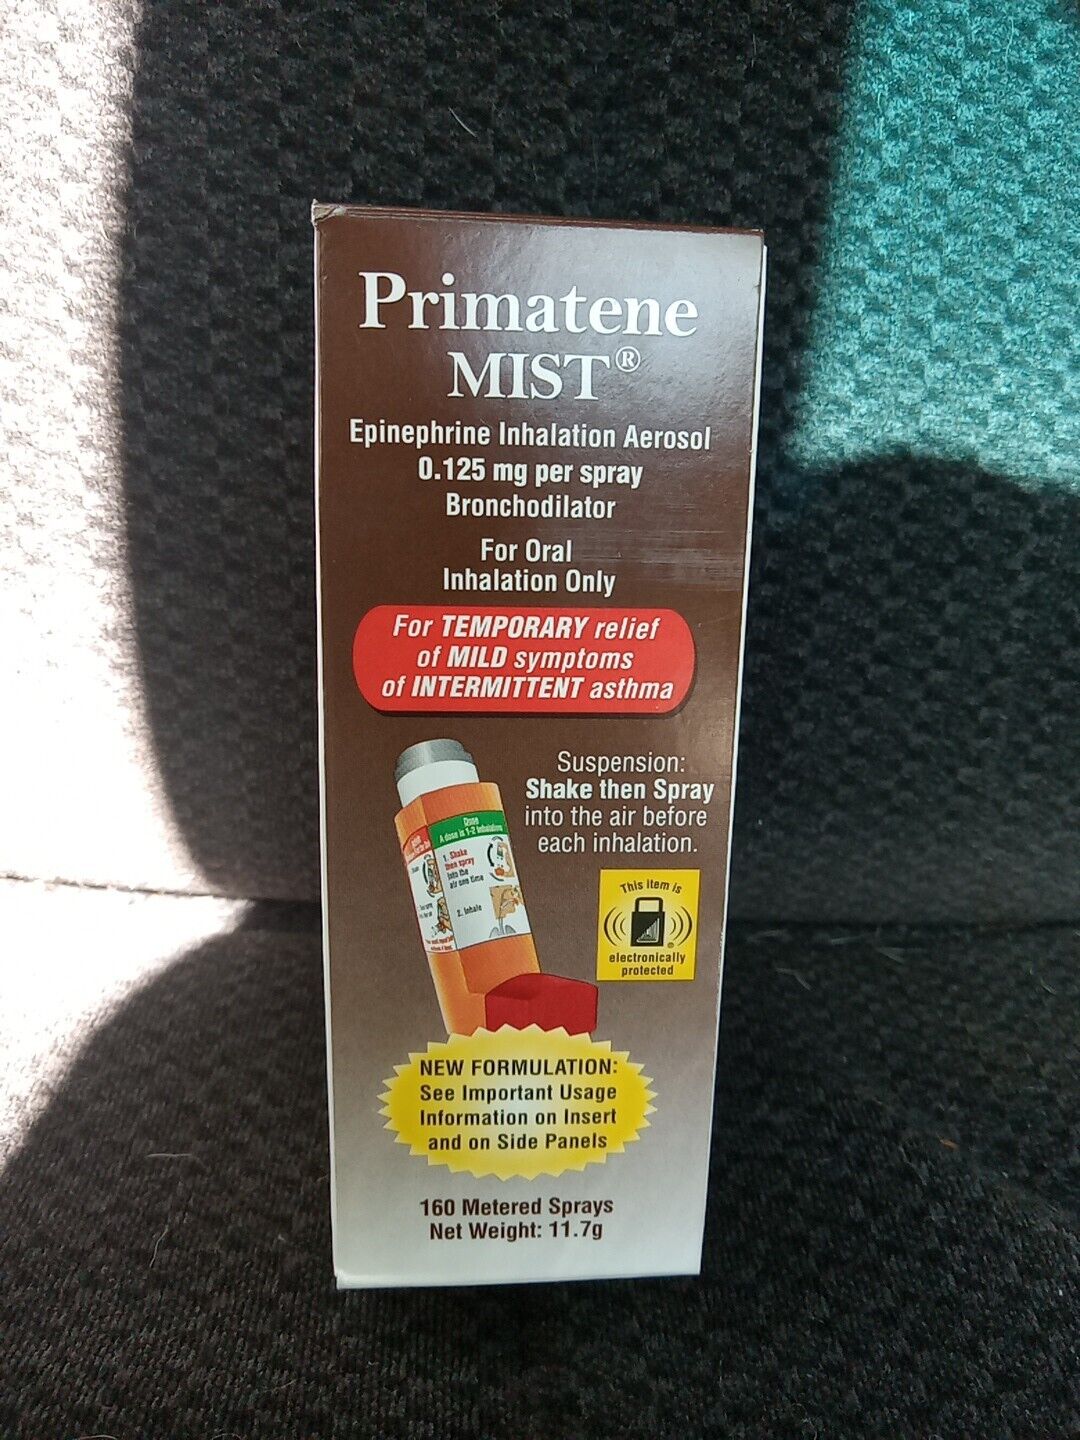 Primatene Mist Epinephrine Inhalation Aerosol 0.125 mg Per Spray Bronchodilator